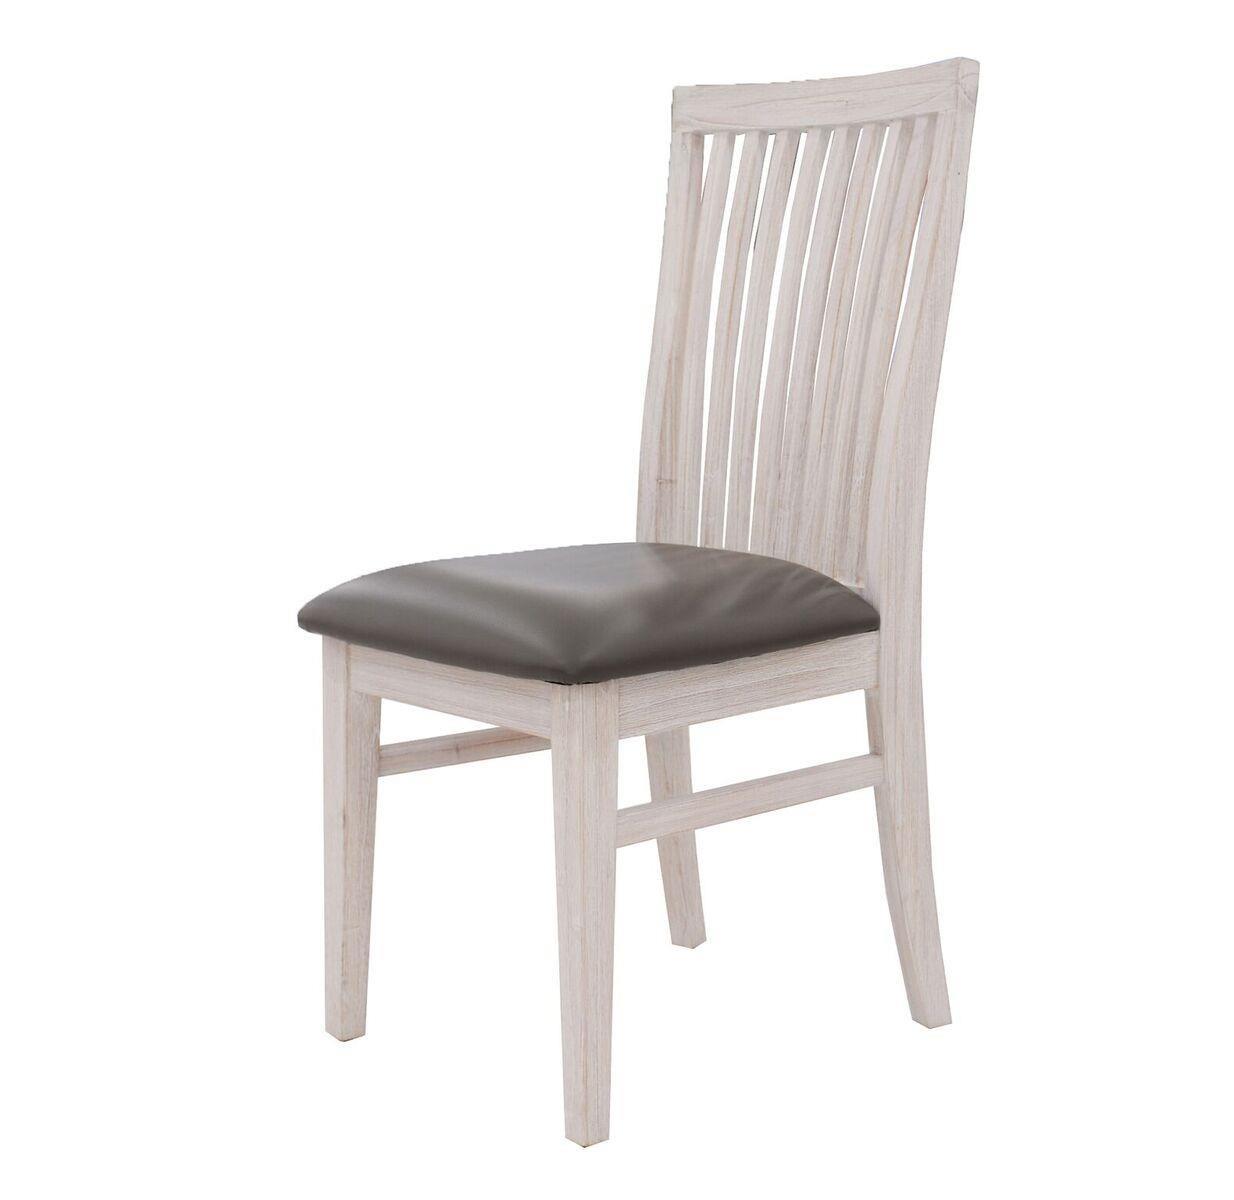 VI Florence Brushed Mountain Ash Dining Chair PU Seat White Wash Finish